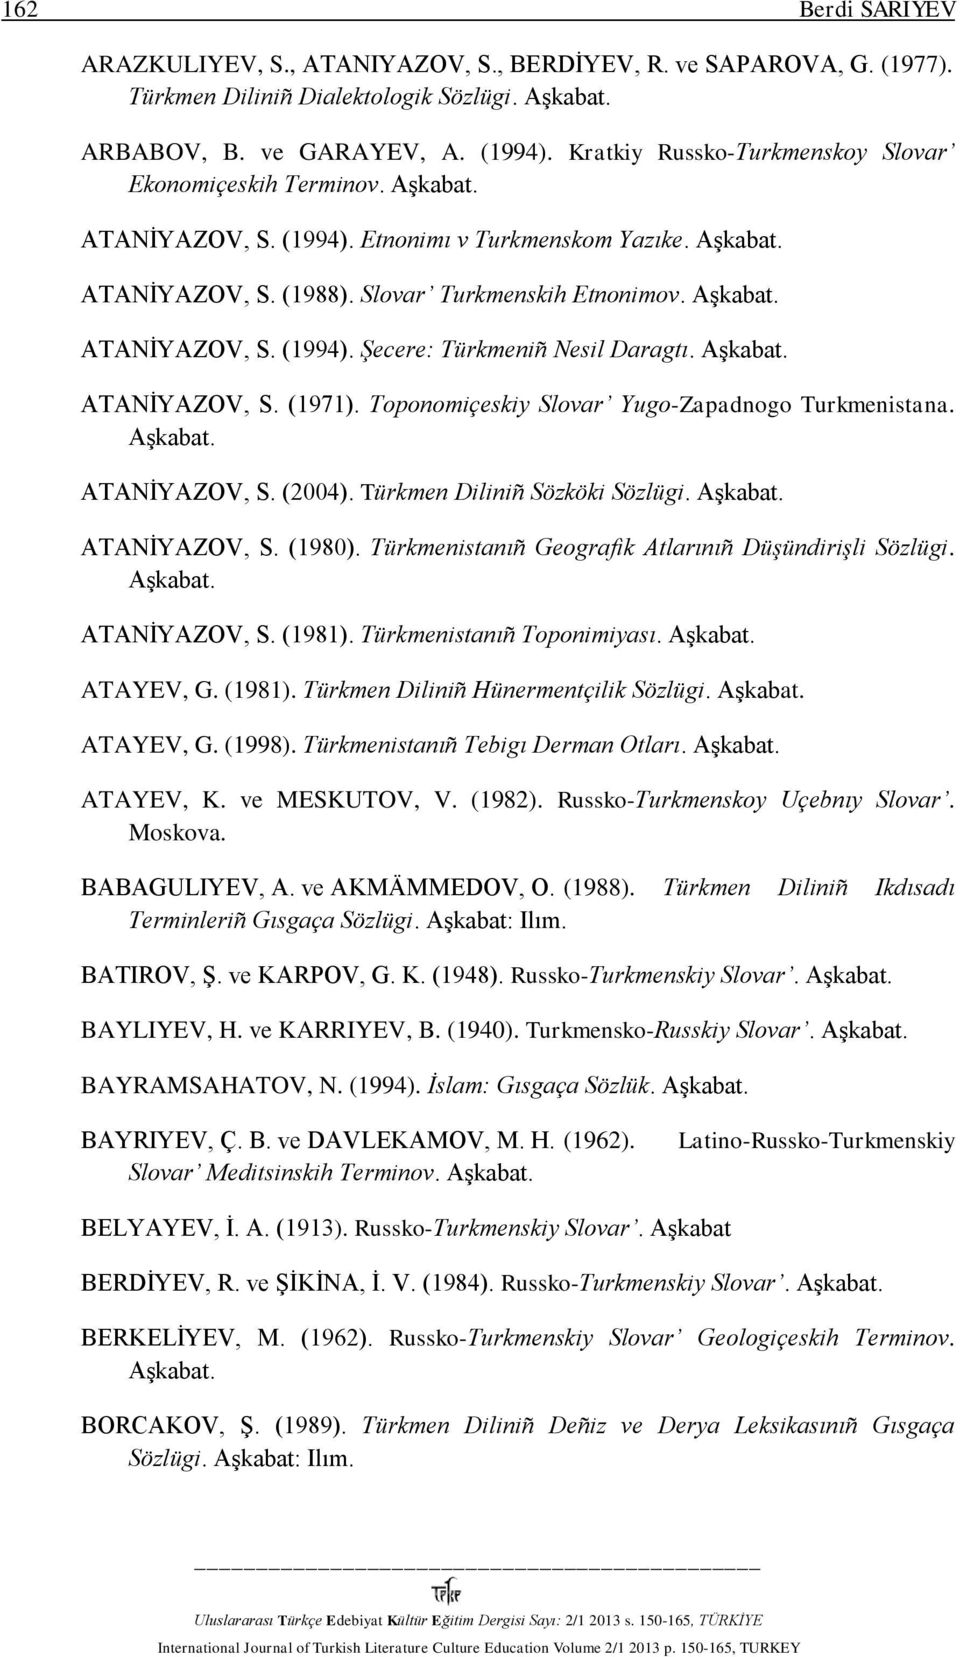 ATANİYAZOV, S. (1971). Toponomiçeskiy Slovar Yugo-Zapadnogo Turkmenistana. ATANİYAZOV, S. (2004). Türkmen Diliniñ Sözköki Sözlügi. ATANİYAZOV, S. (1980).